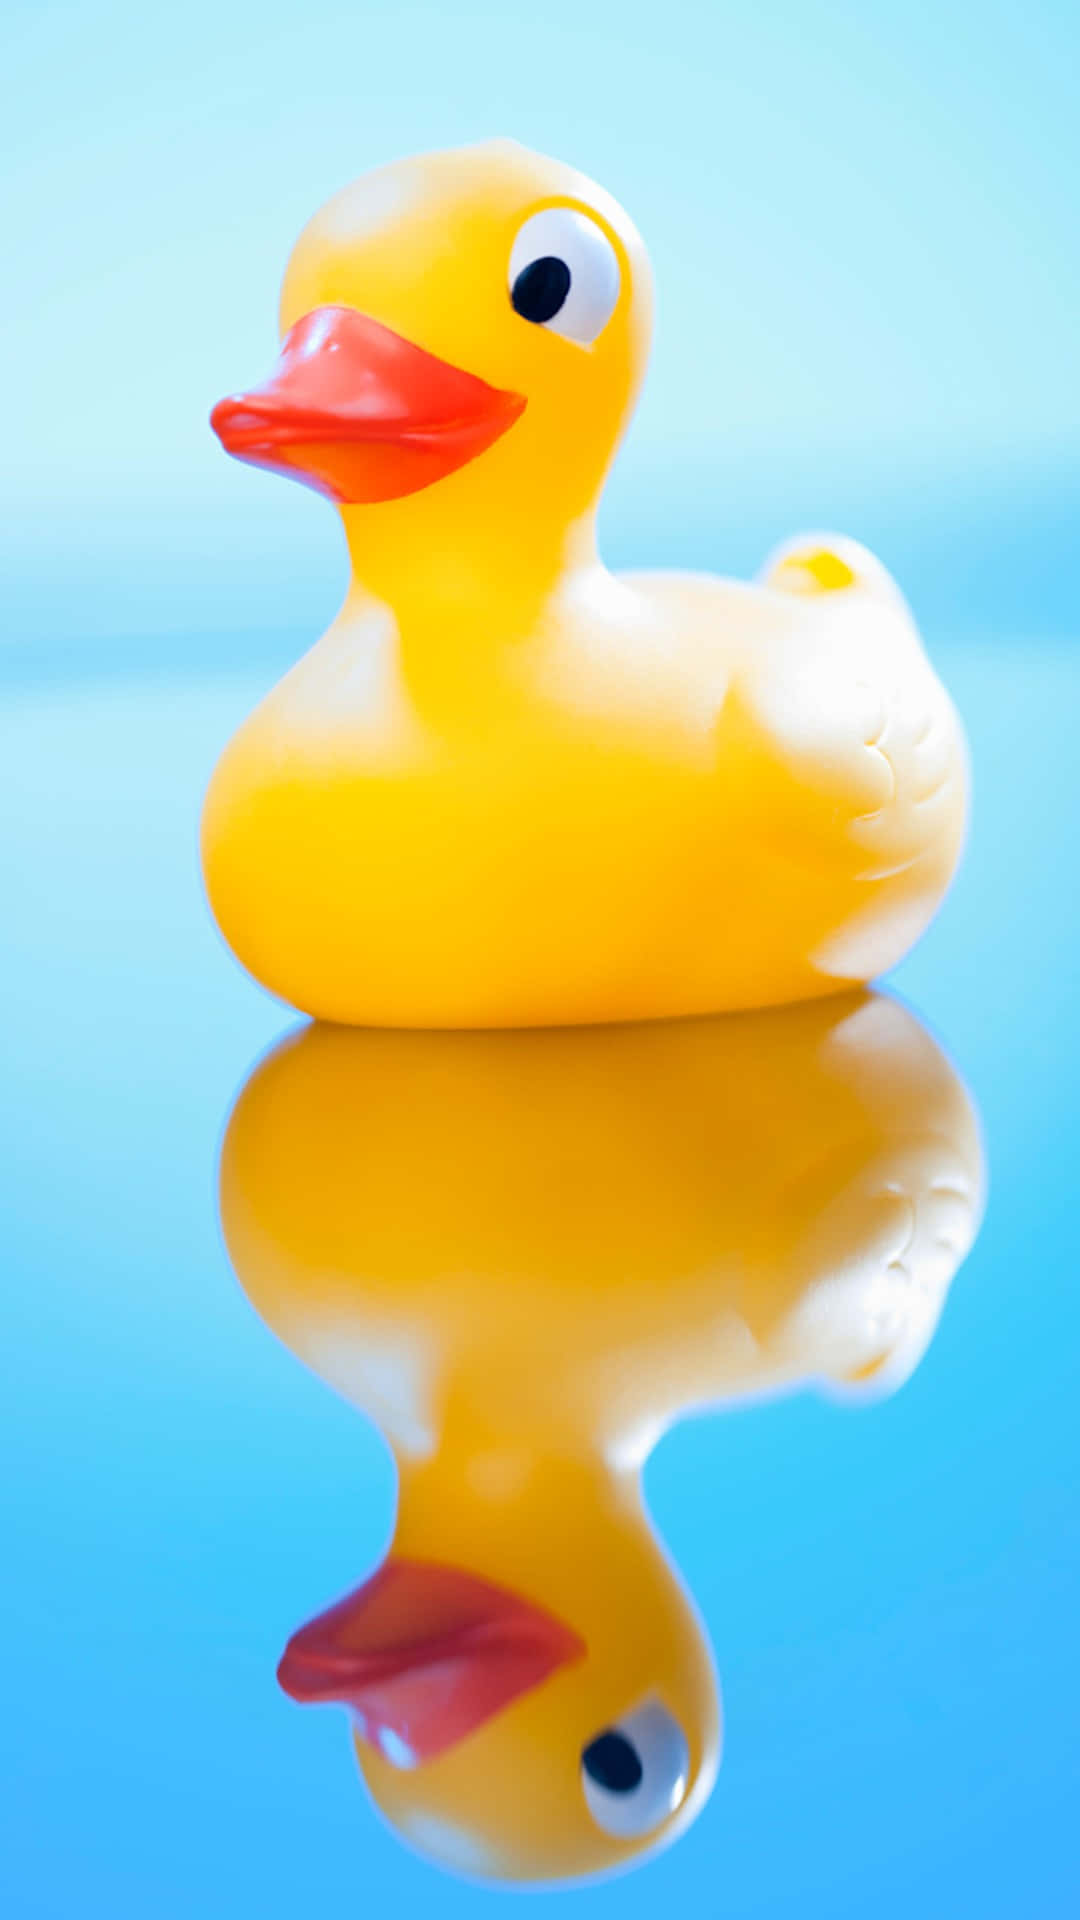 Yellow Rubber Duck Reflection Wallpaper